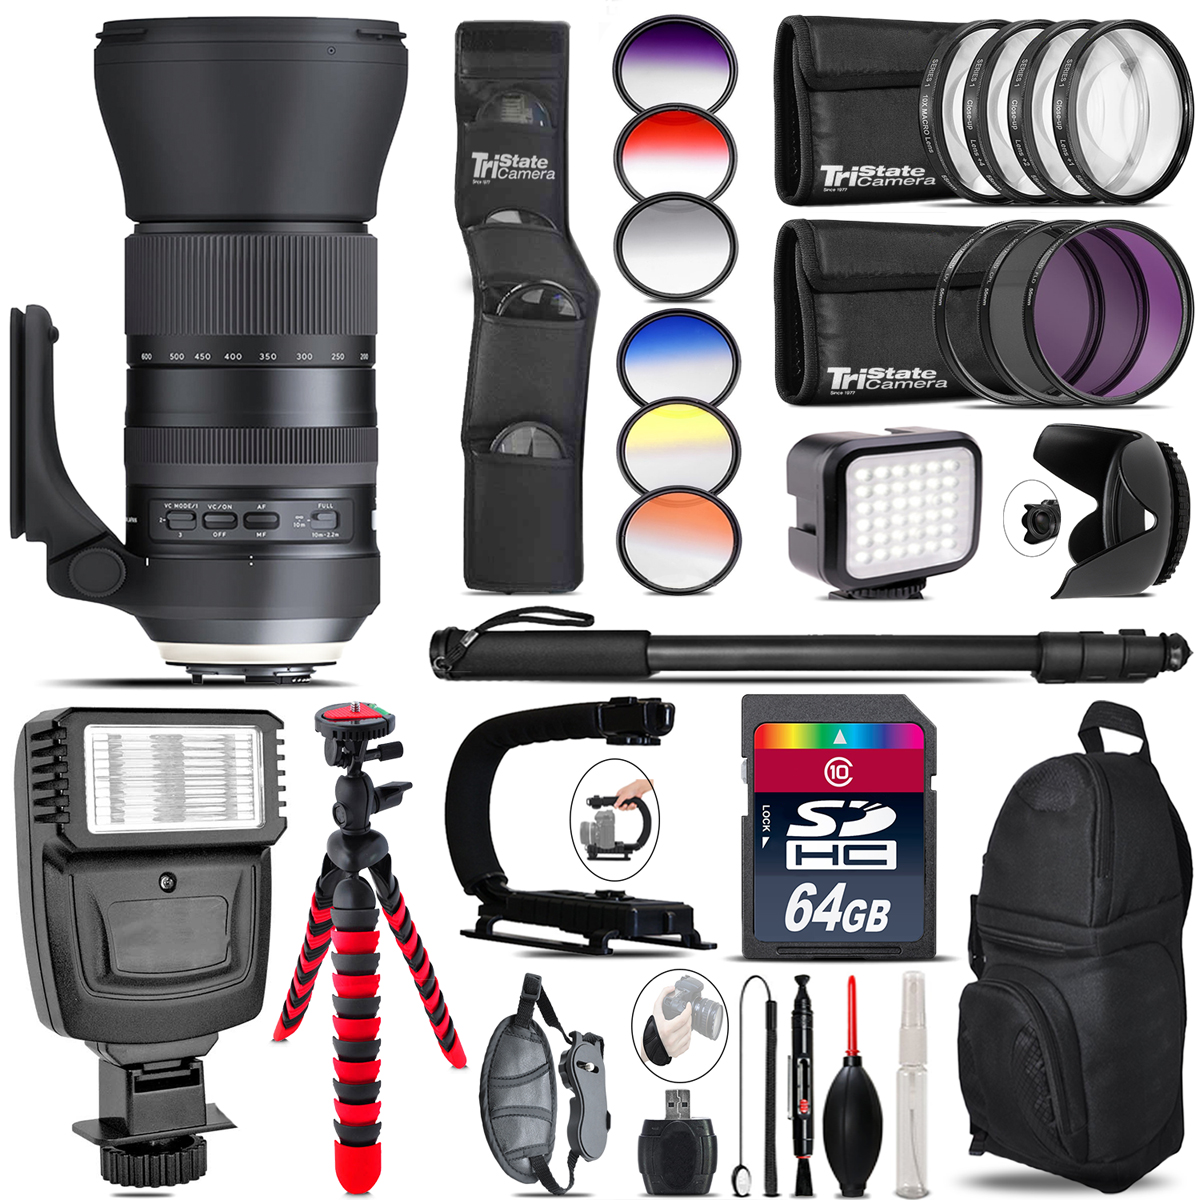 150-600mm G2 for Nikon + Color Set + LED Light - 64GB Accessory Bundle *FREE SHIPPING*